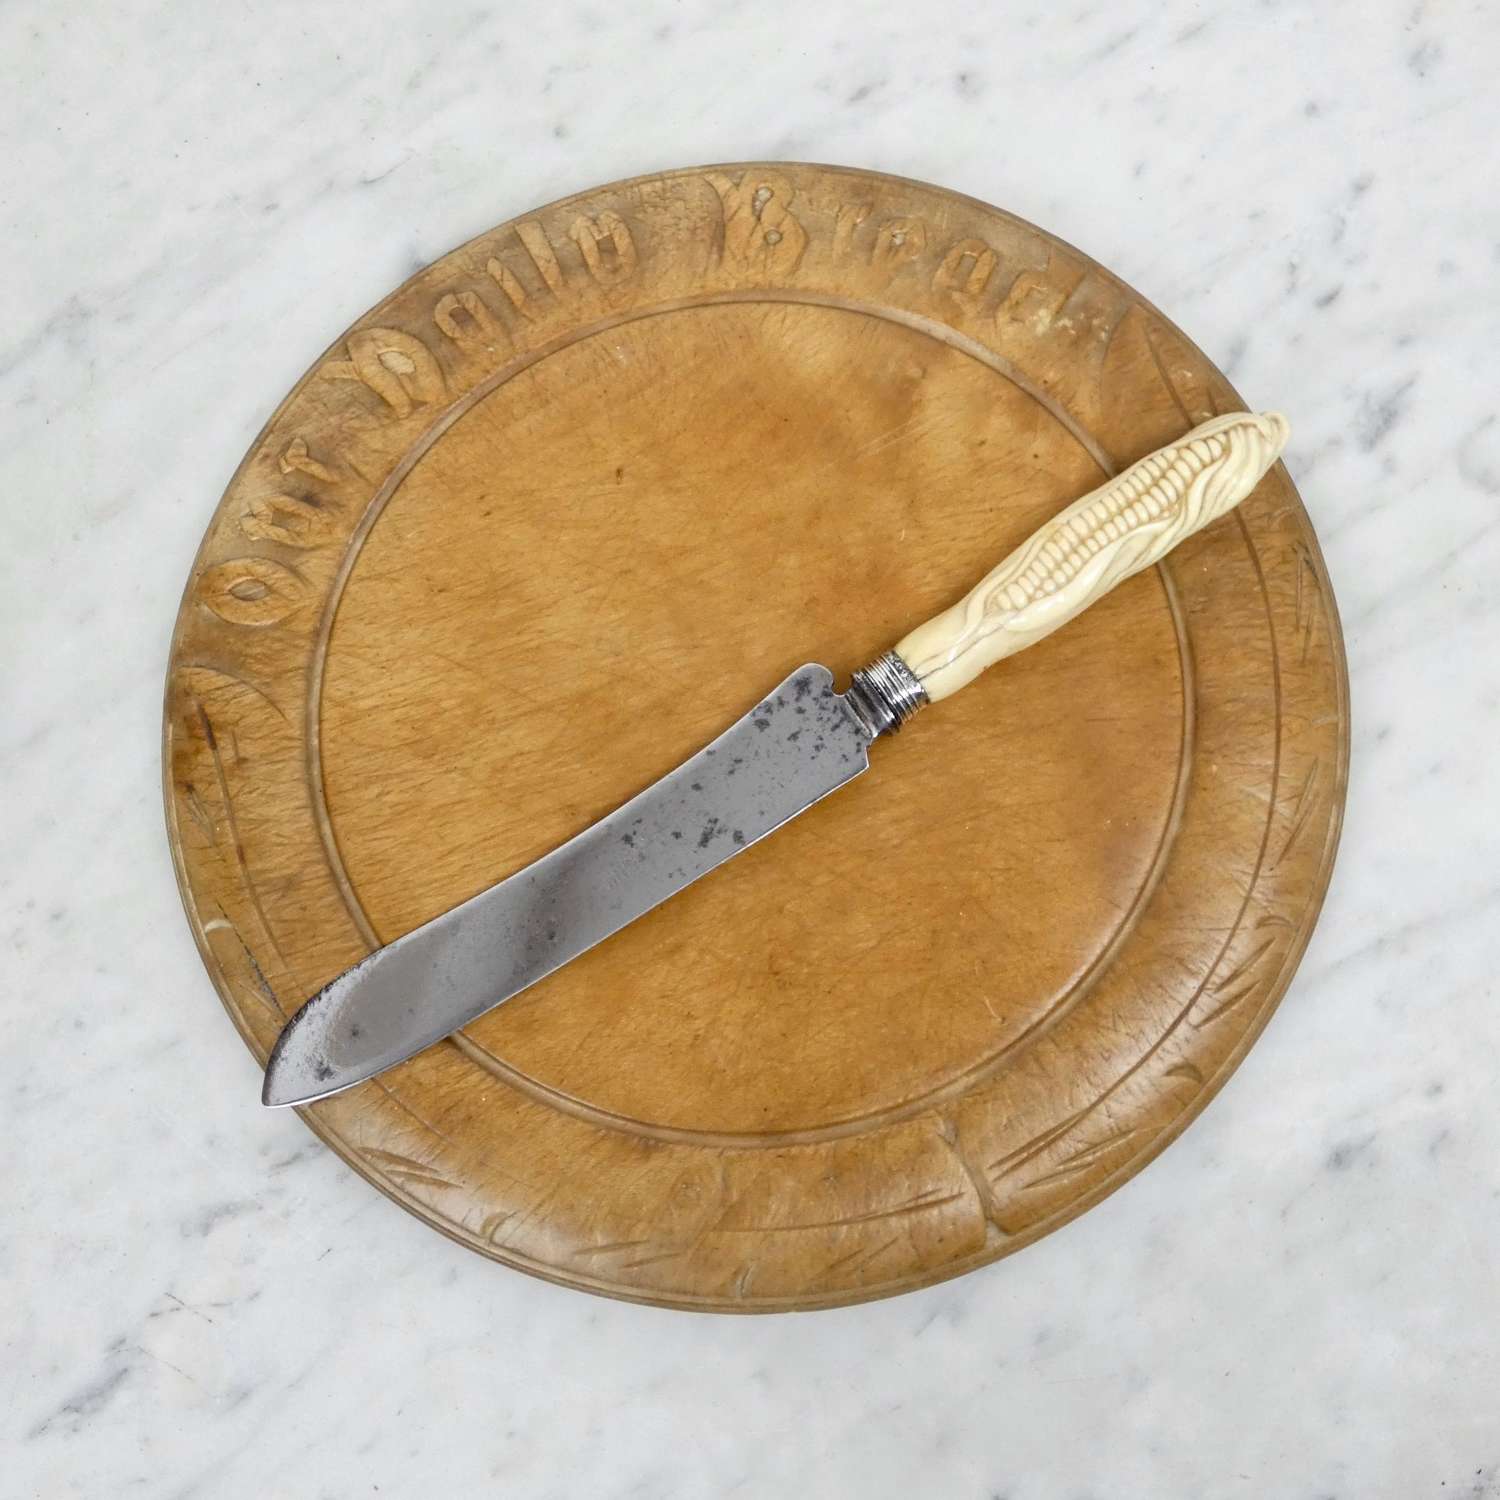 Ivory Handled Bread Knife